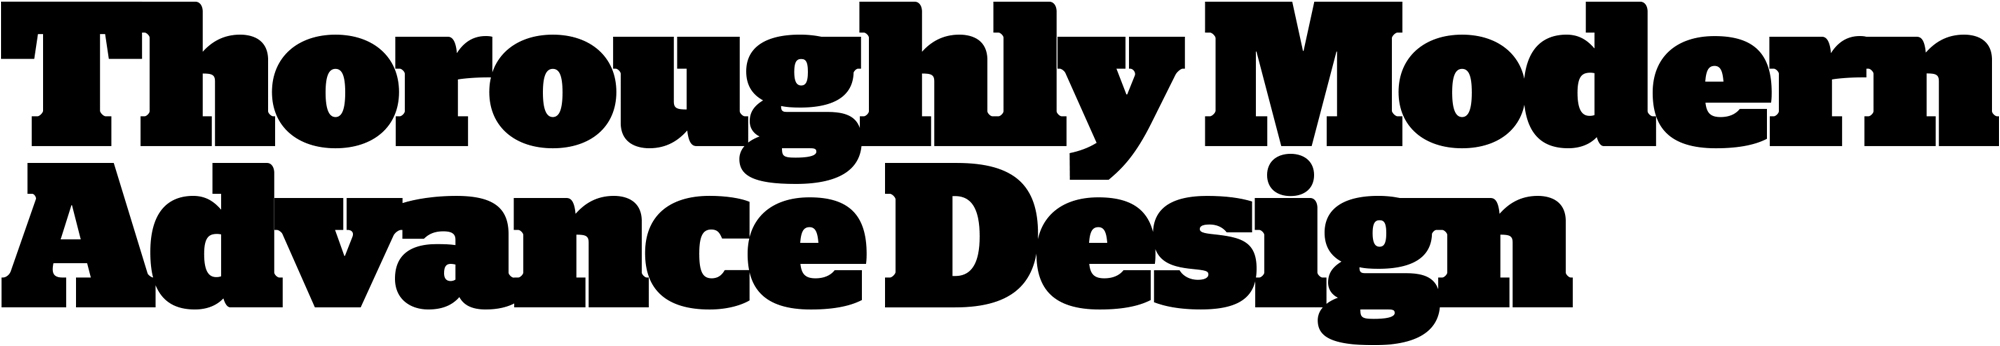 Thoroughly Modern Advance Design typography